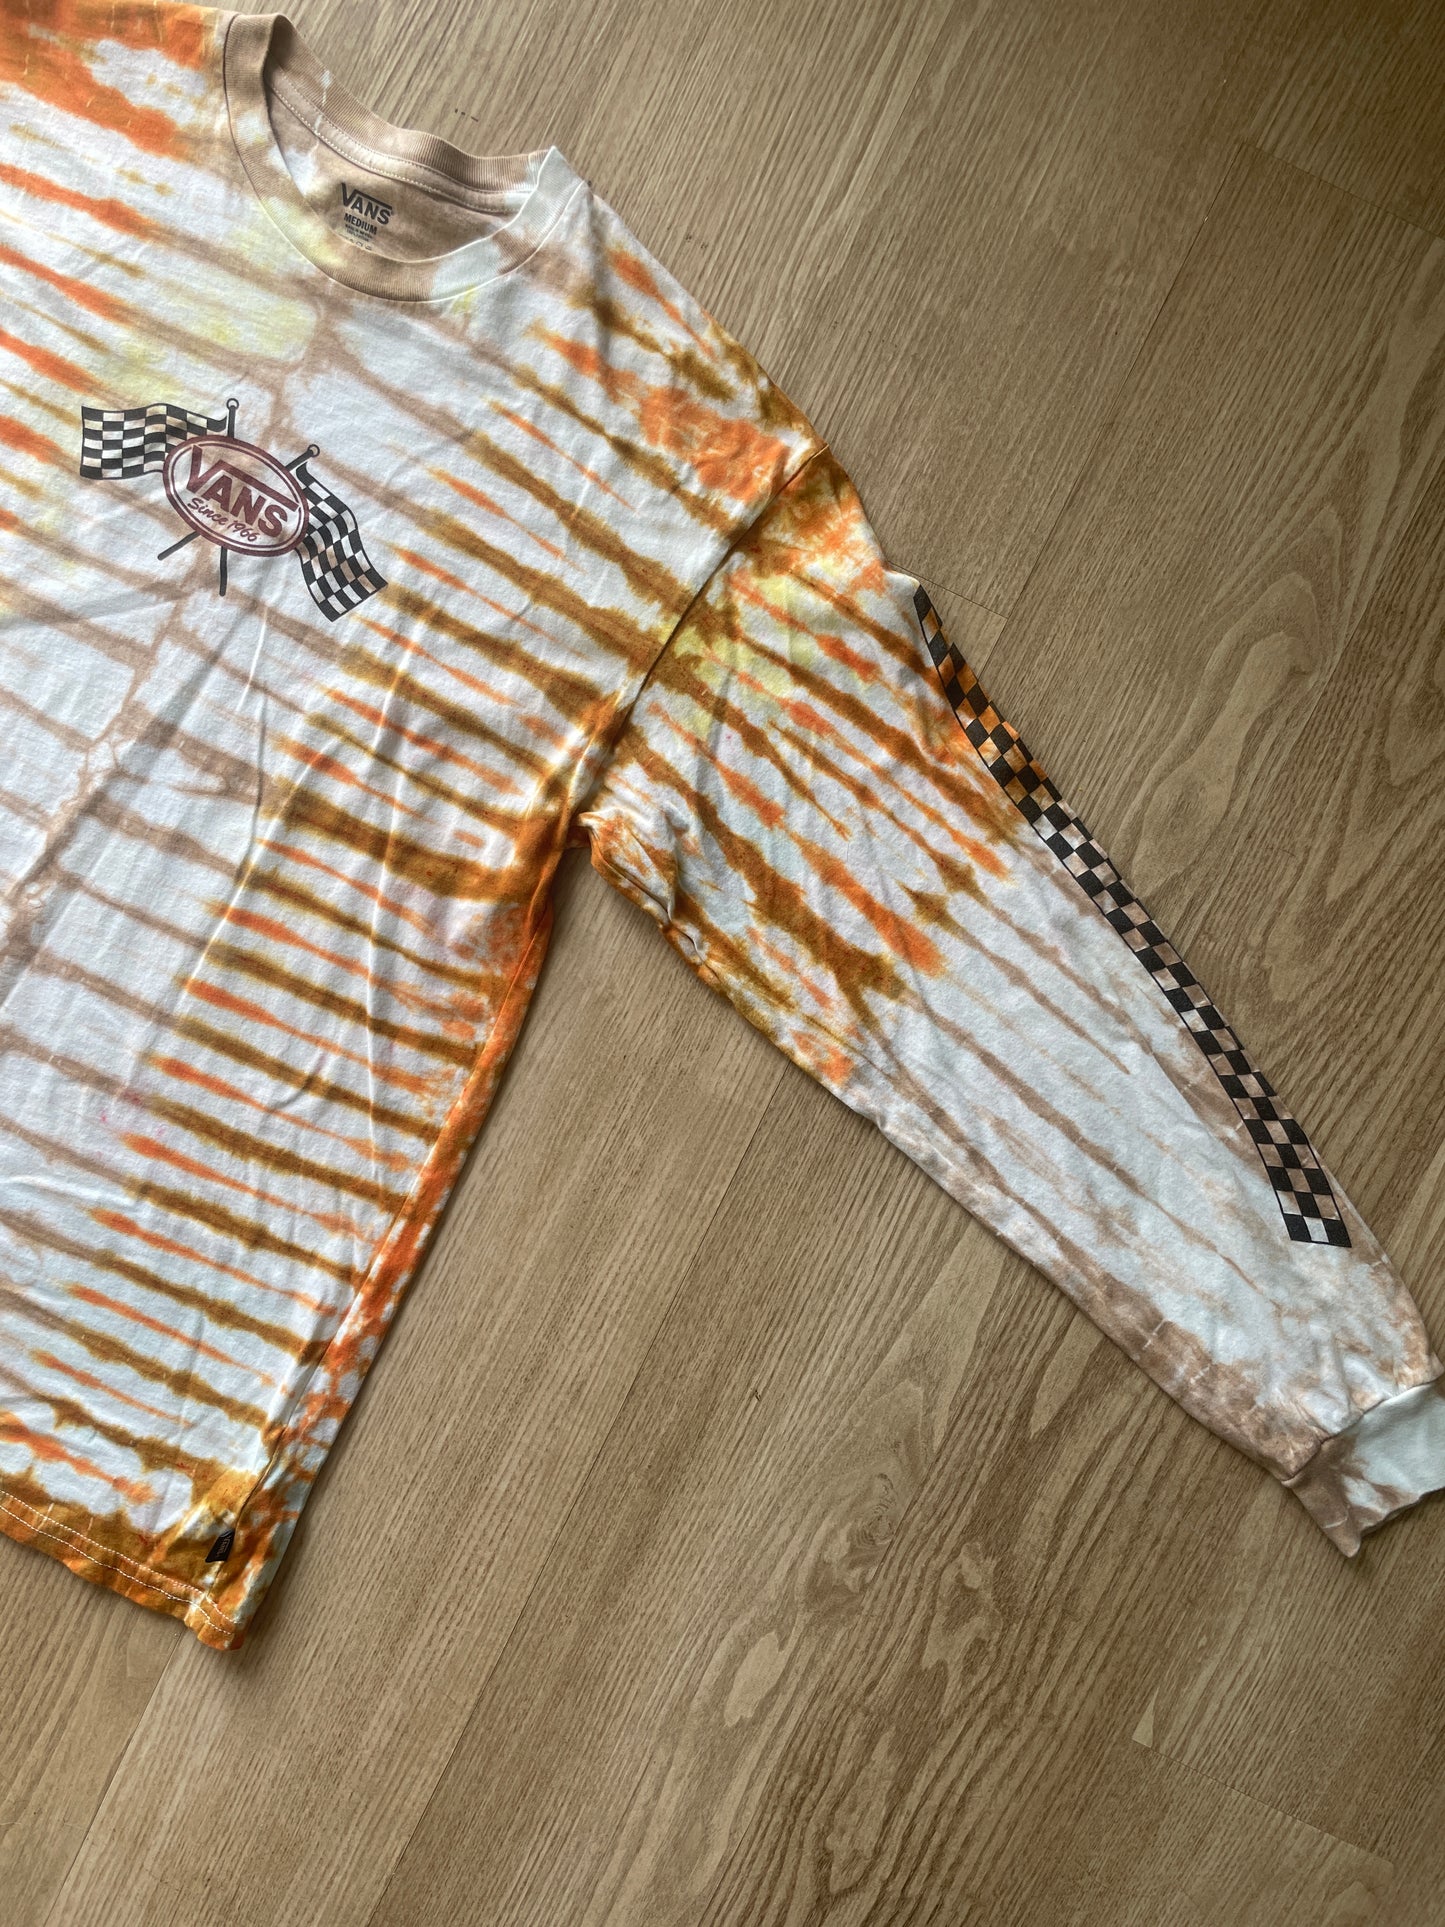 MEDIUM Men’s Vans Checkerboard Handmade Tie Dye T-Shirt | One-Of-a-Kind Orange and Brown Earth Tones Long Sleeve